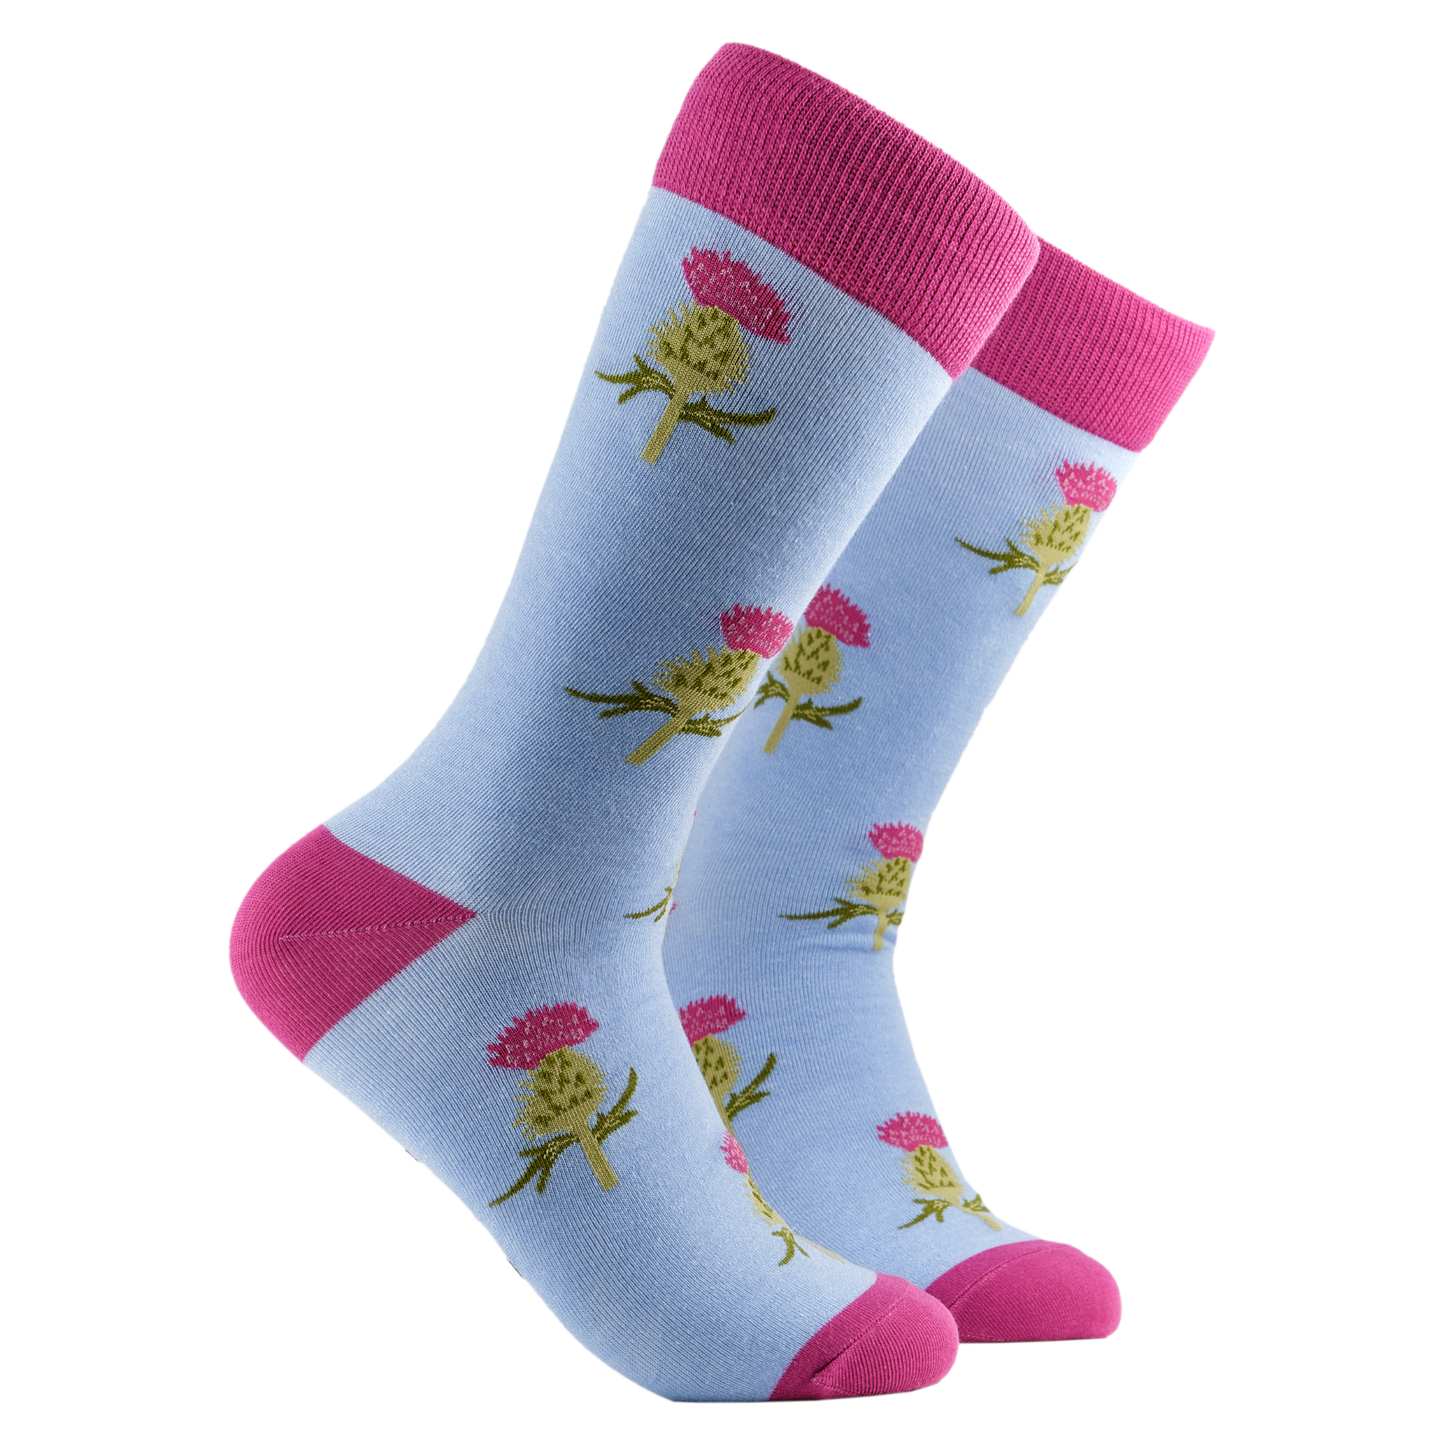 Scottish Socks - Thistles. A pair of socks depicting thistles. Blue legs, pink cuff, heel and toe.